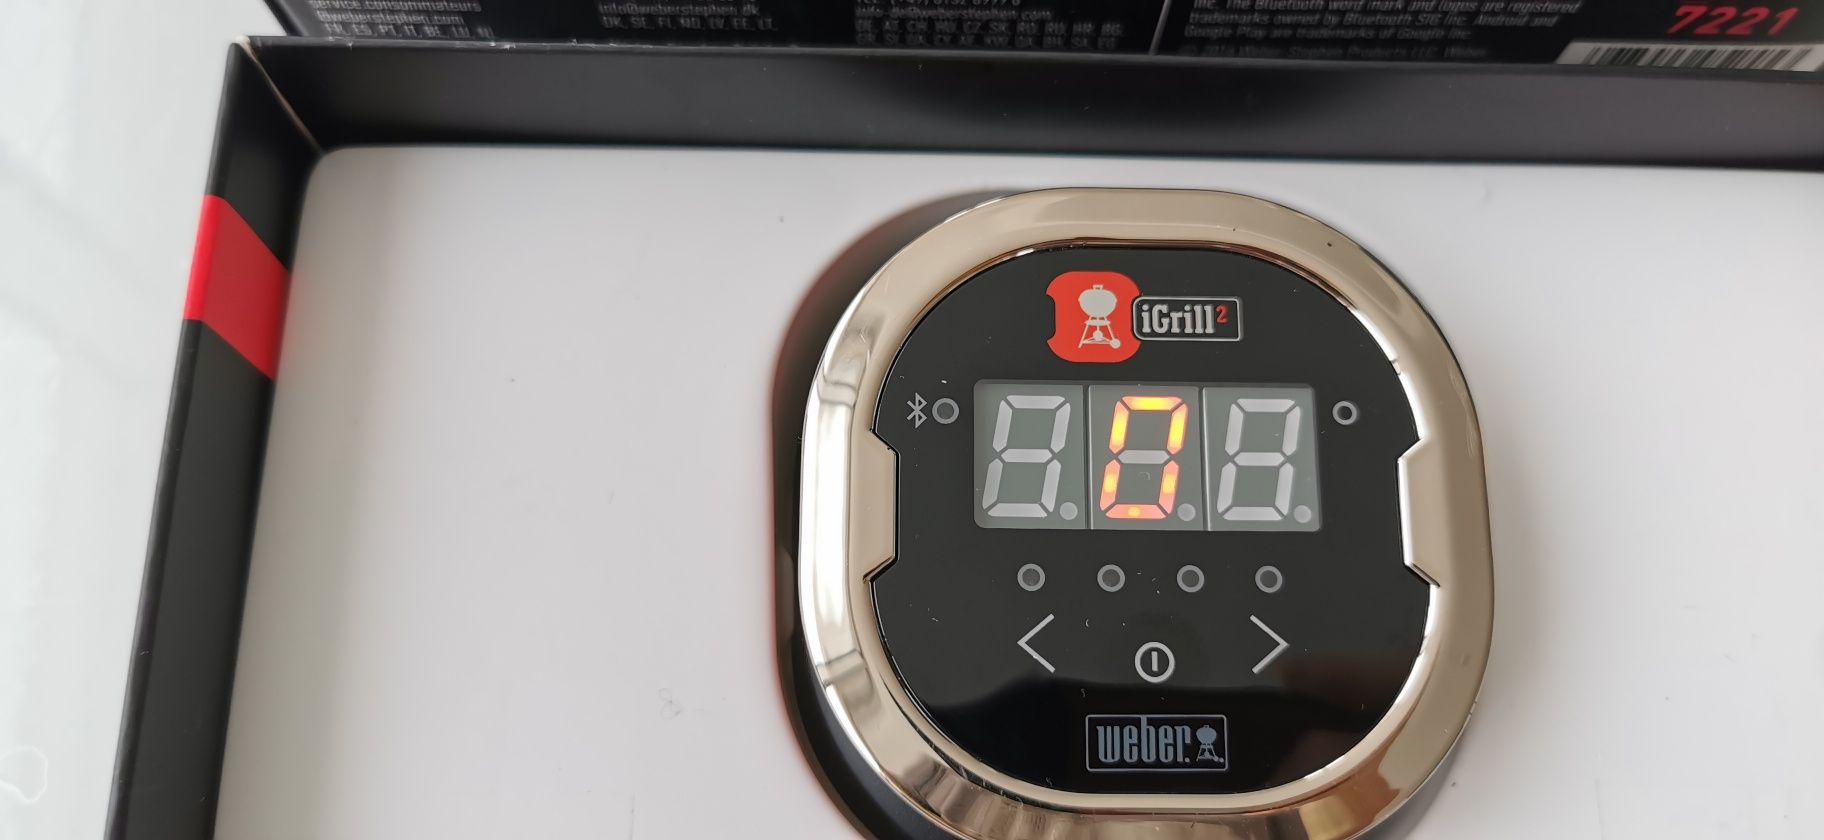 Weber Igrill 2 mini Bluetooth Термометр электронный для гриля мяса